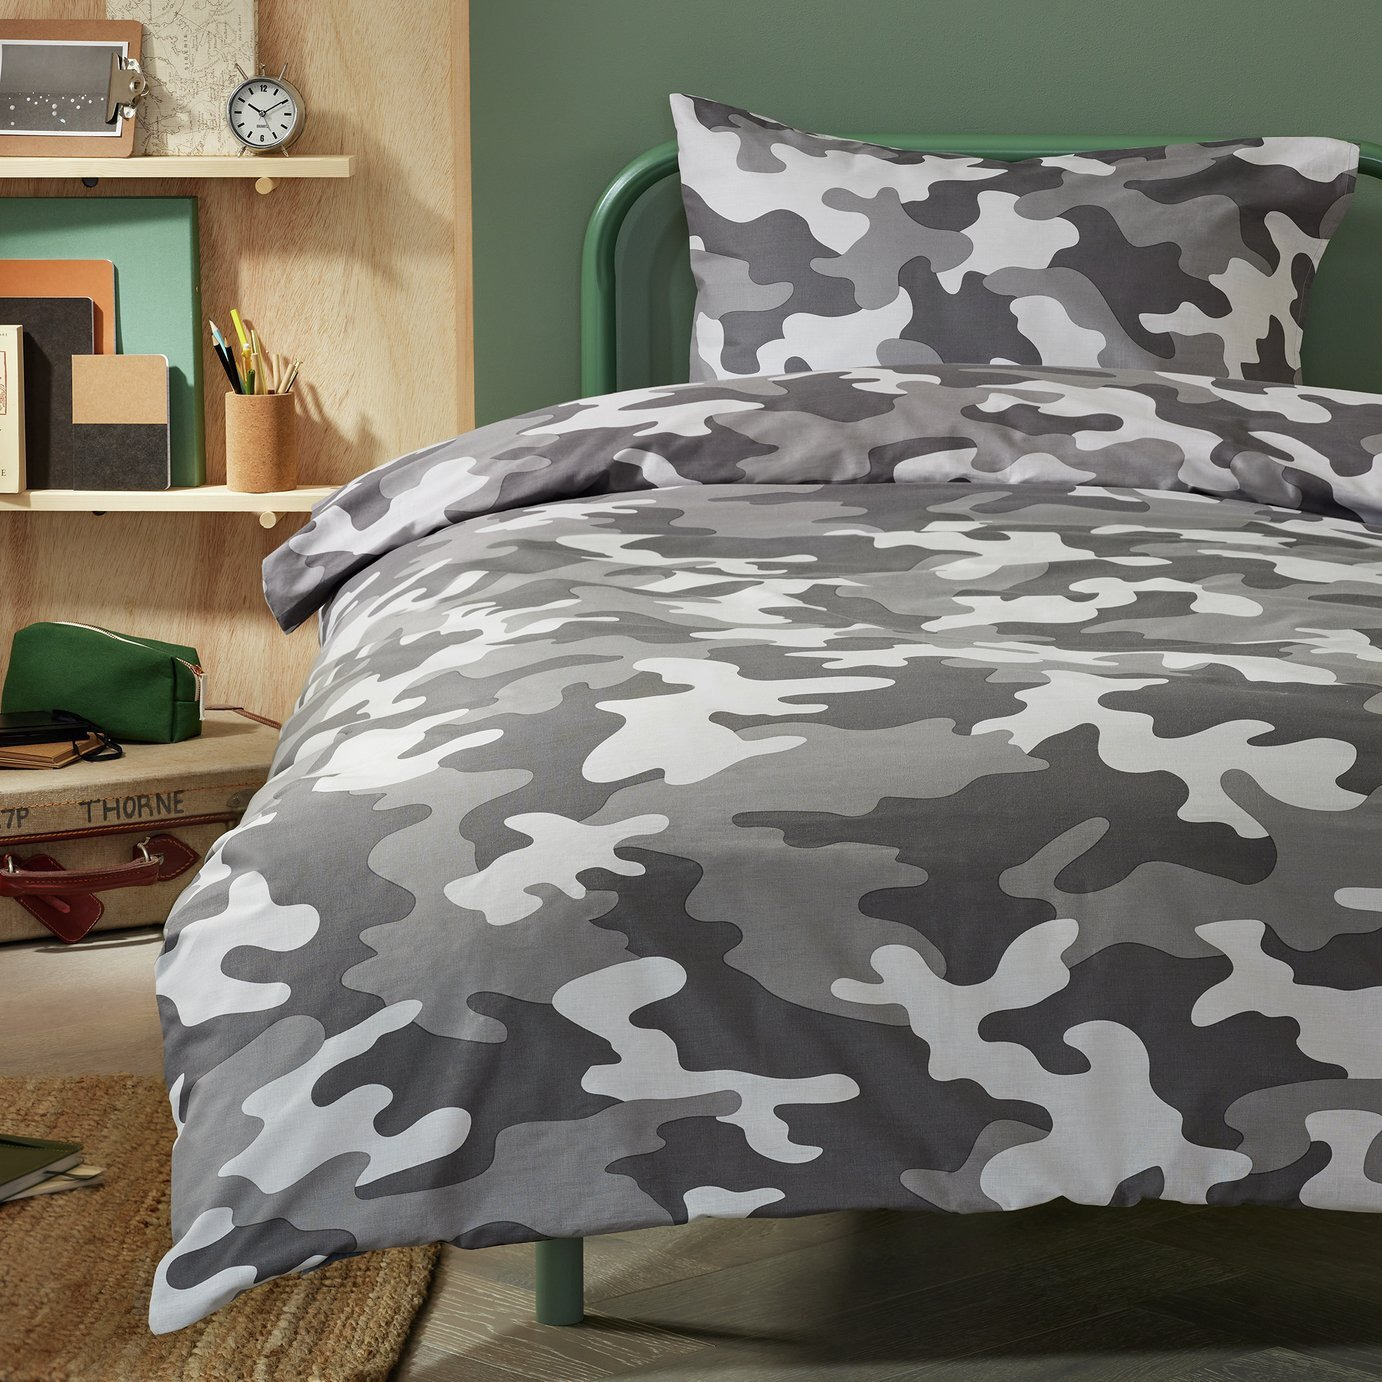 Argos Home Camo Grey Kids Bedding Set - Single - image 1